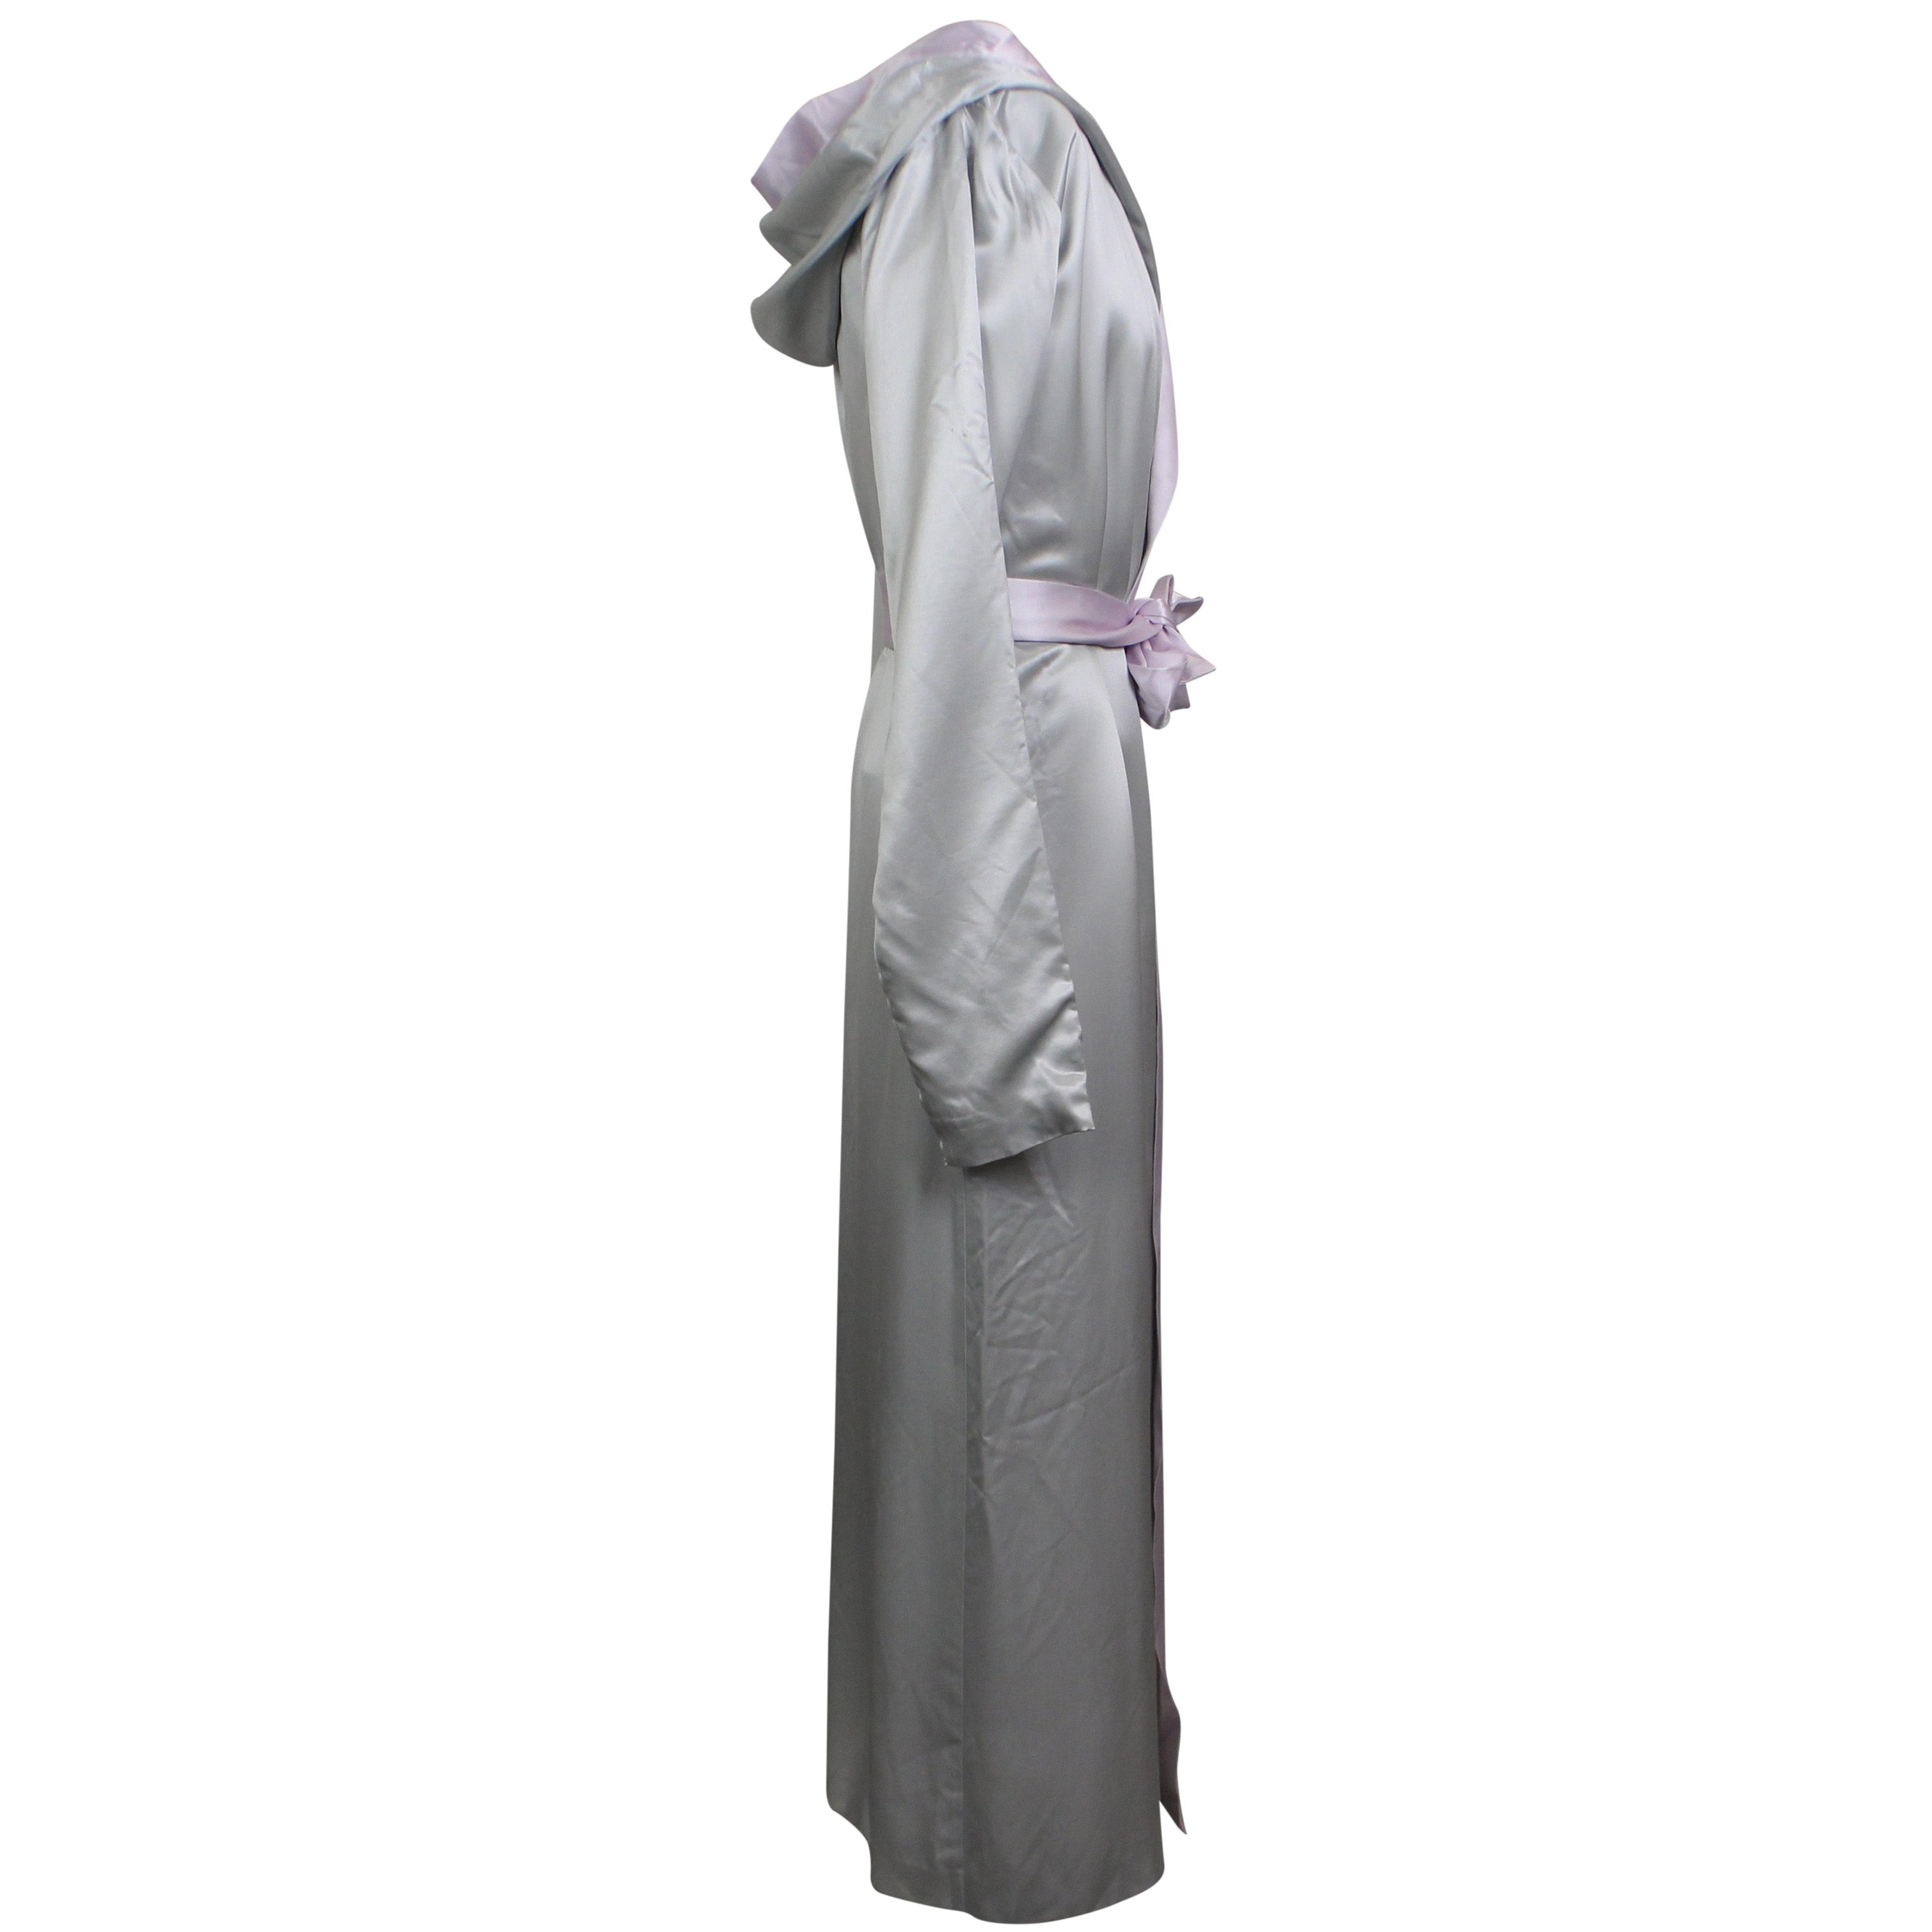 Alternate View 2 of Light Gray Silk Long Boxing Robe Dress